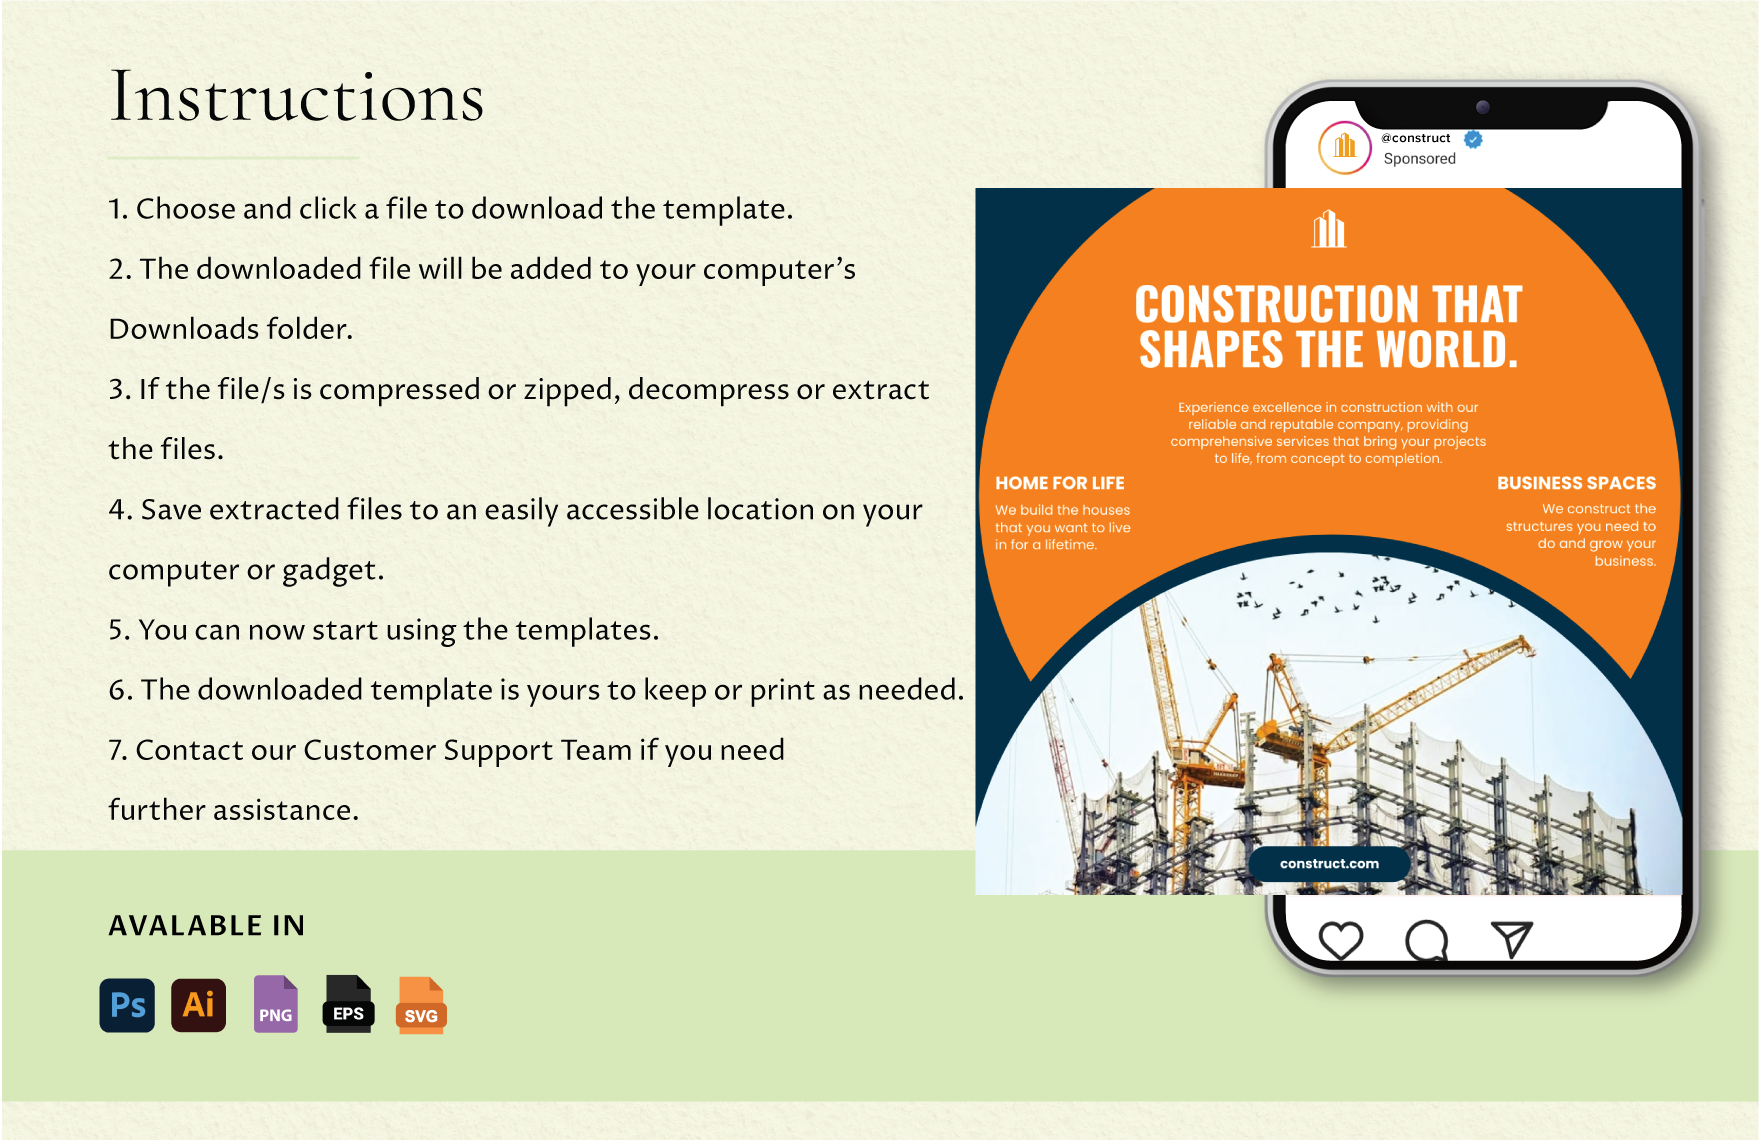 Construction Company Instagram Ad